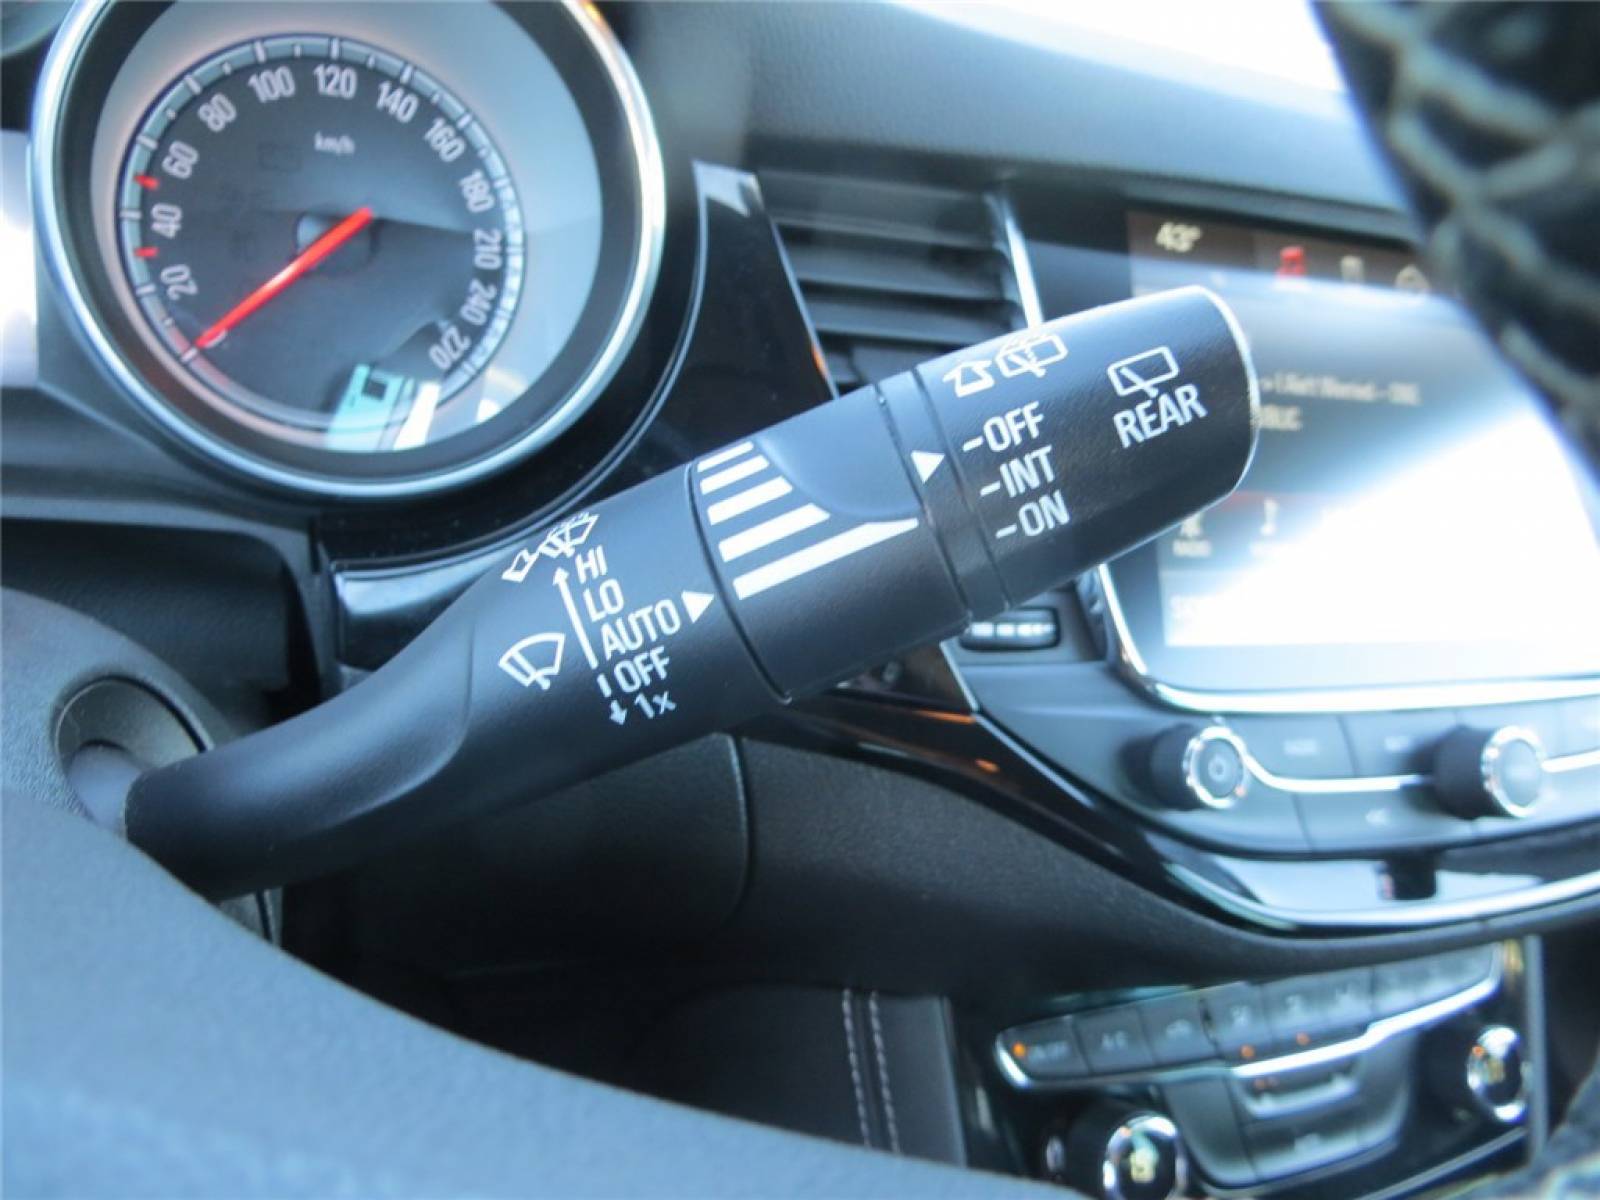 OPEL Astra 1.4 Turbo 150 ch Start/Stop BVA6 - véhicule d'occasion - Groupe Guillet - Opel Magicauto - Chalon-sur-Saône - 71380 - Saint-Marcel - 24